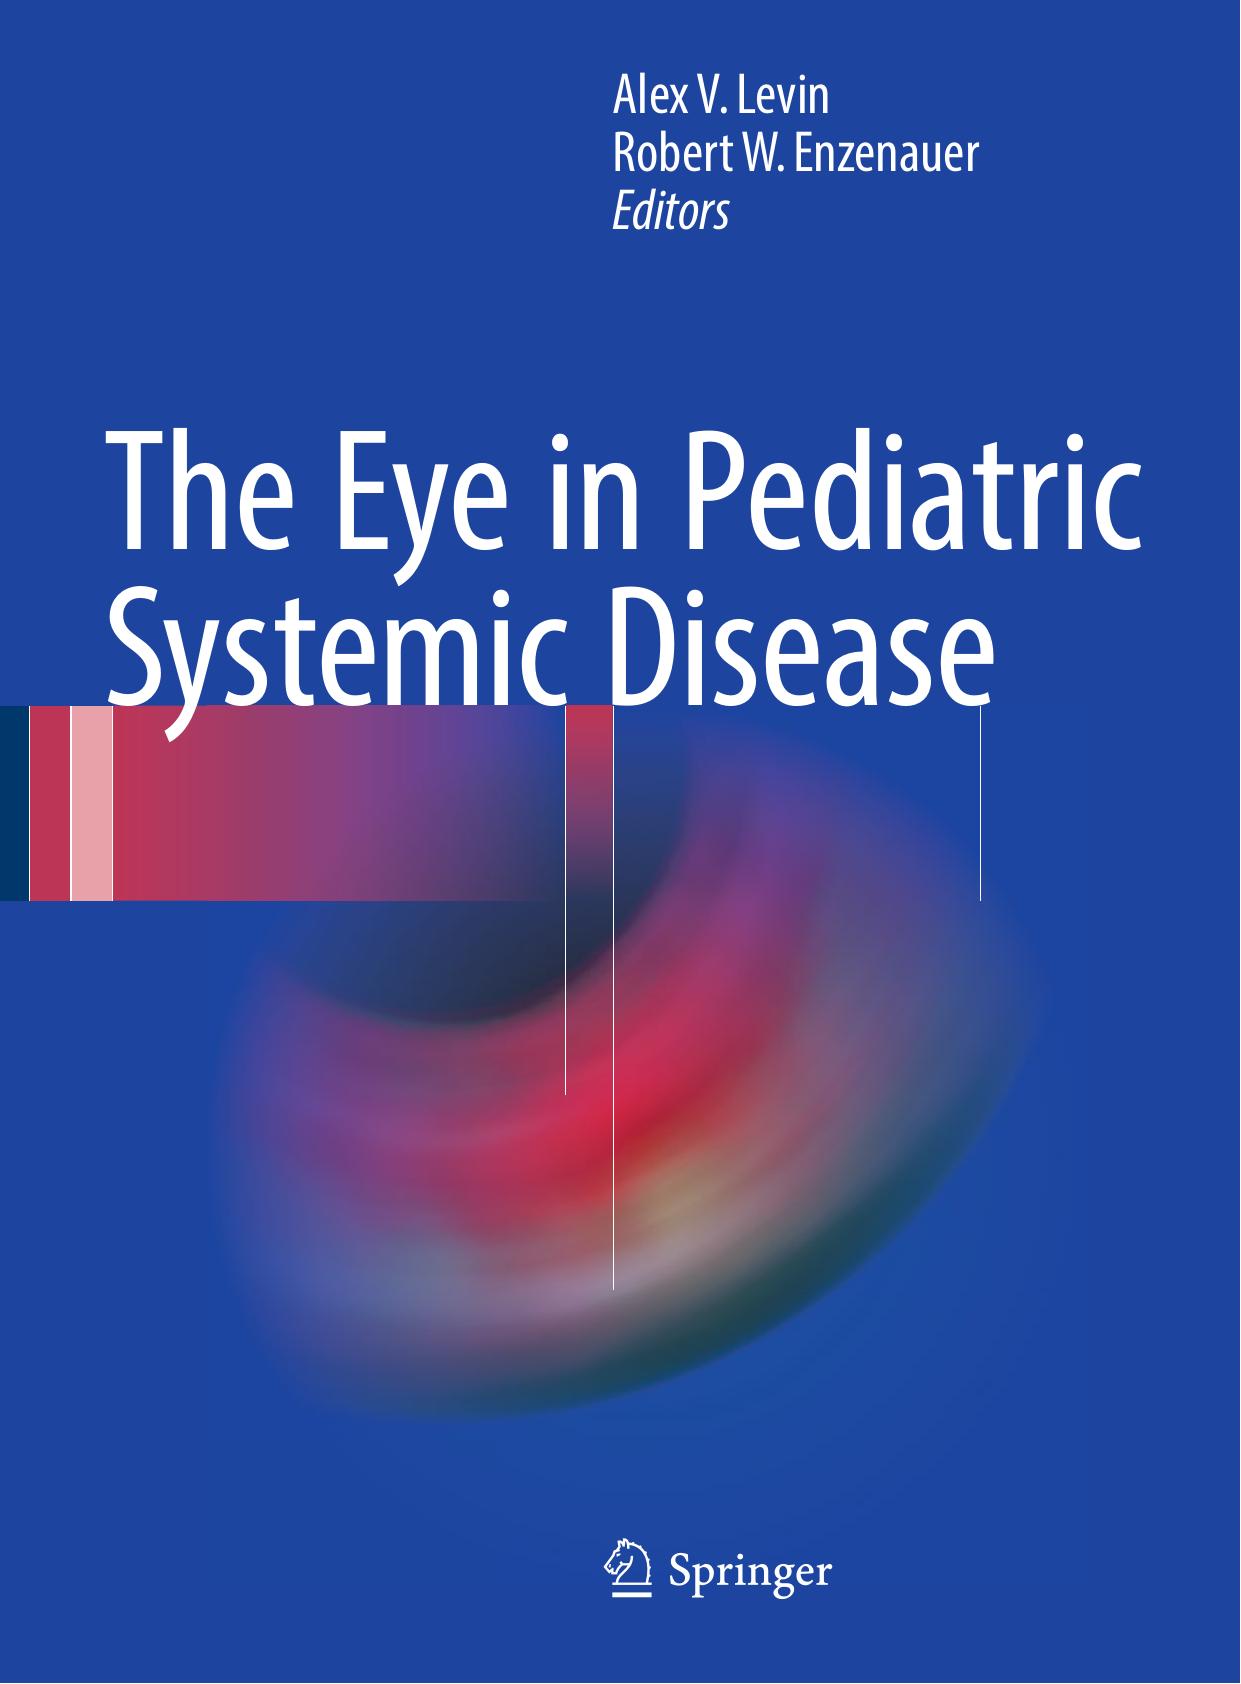 The Eye in Pediatric Systemic Disease 2017